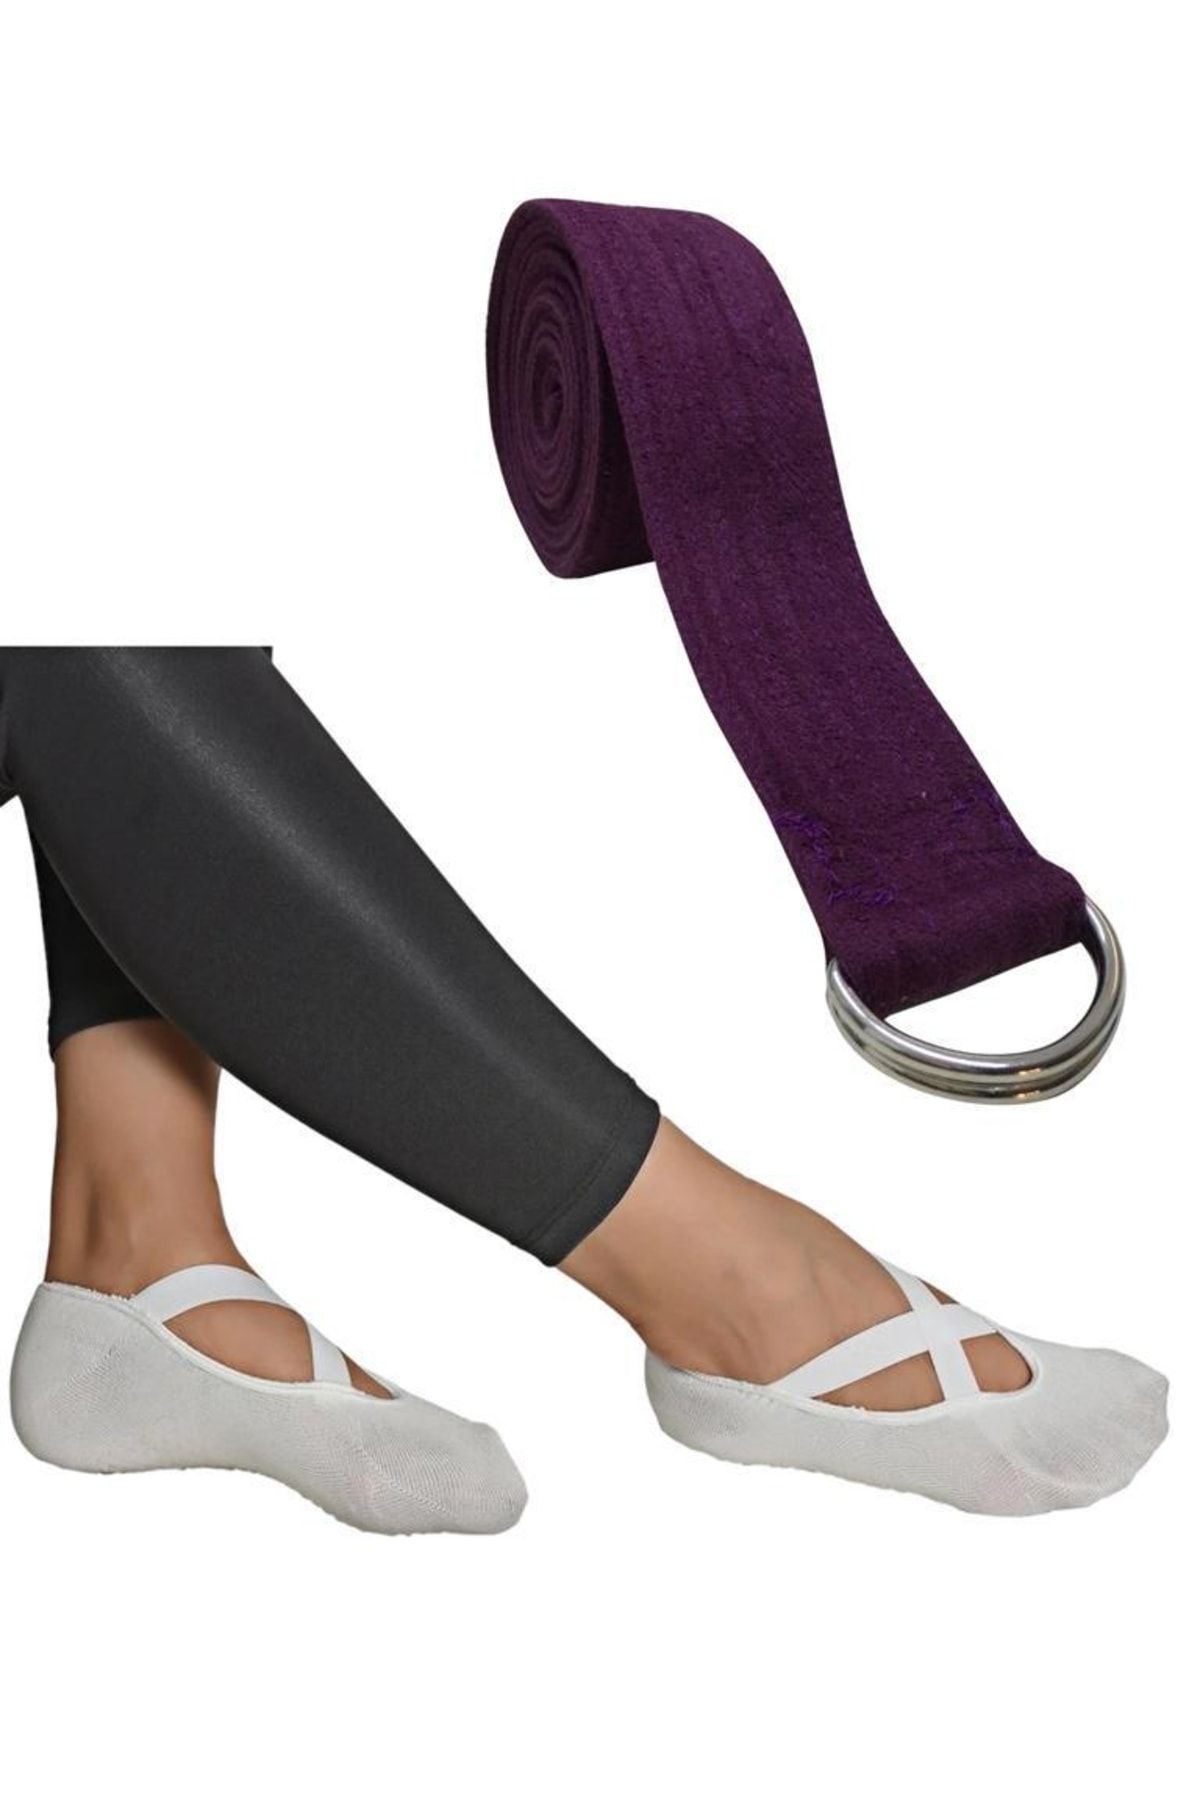 REMEGE Yoga Socks - Yoga Belt Set of Two / Non-Slip Pilates Socks Dance  Yoga Socks + Yoga Belt - Trendyol